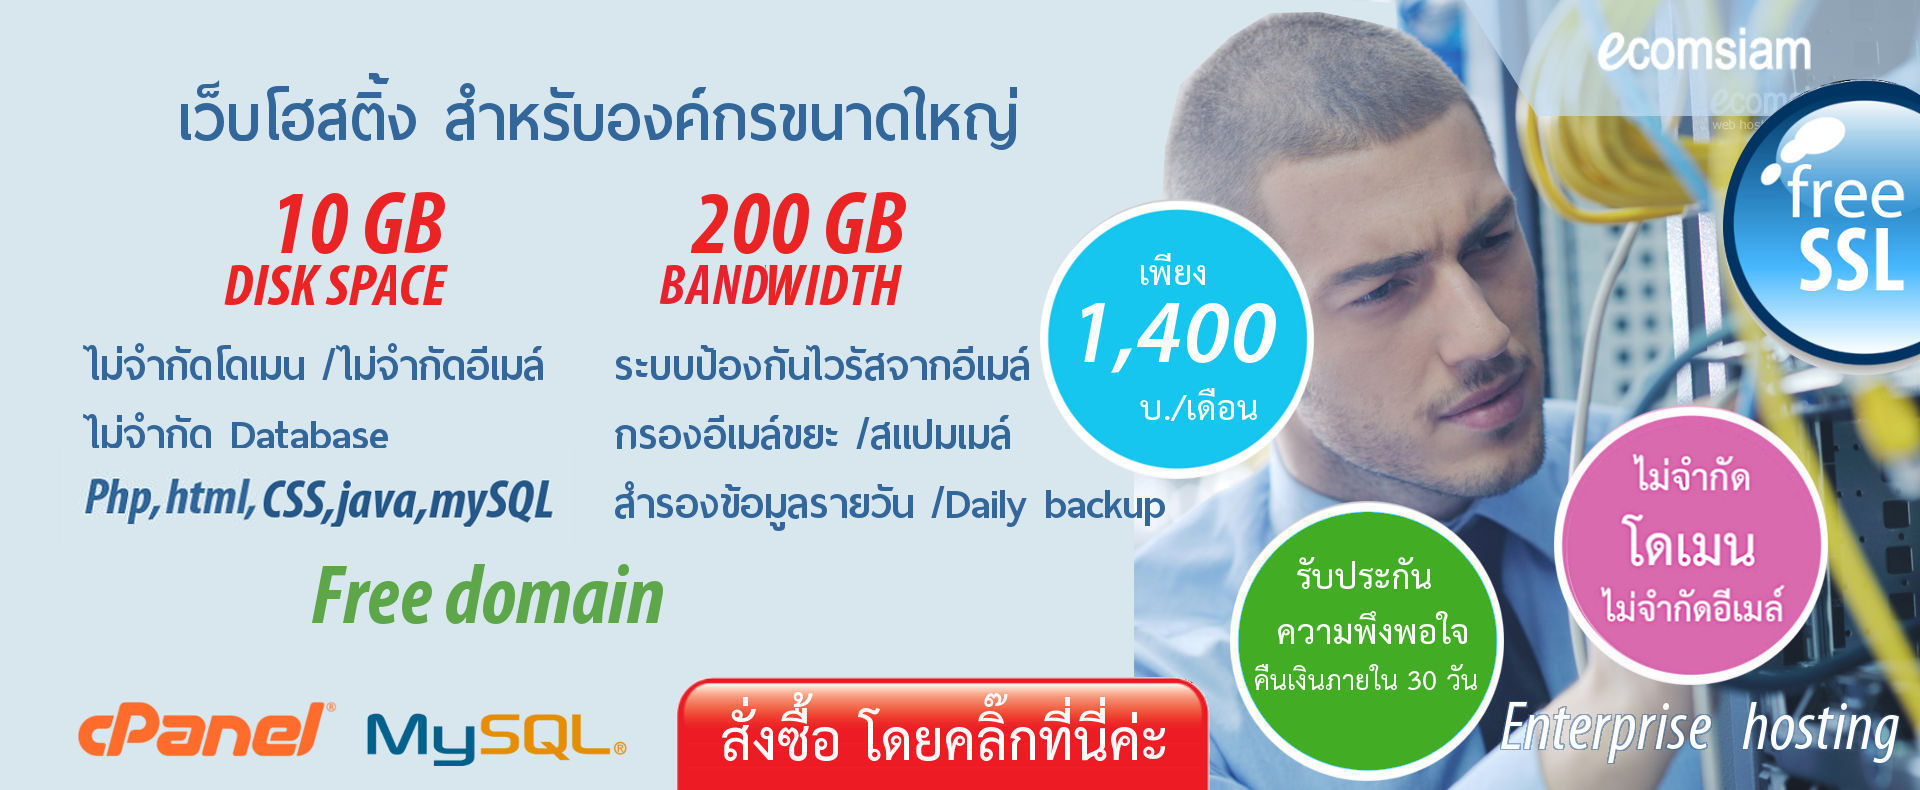 enterprise hosting plan thai เว็บโฮสติ้งไทย สำหรับองค์กรขนาดใหญ่  ฟรี SSL เว็บโฮสติ้งไทย ฟรีโดเมน สำหรับองค์กร ที่ต้องการใช้งานเว็บไซต์และฐานข้อมูล MySql ฟรี SSL เริ่มต้นเพียง 1,400 บาทต่อเดือน